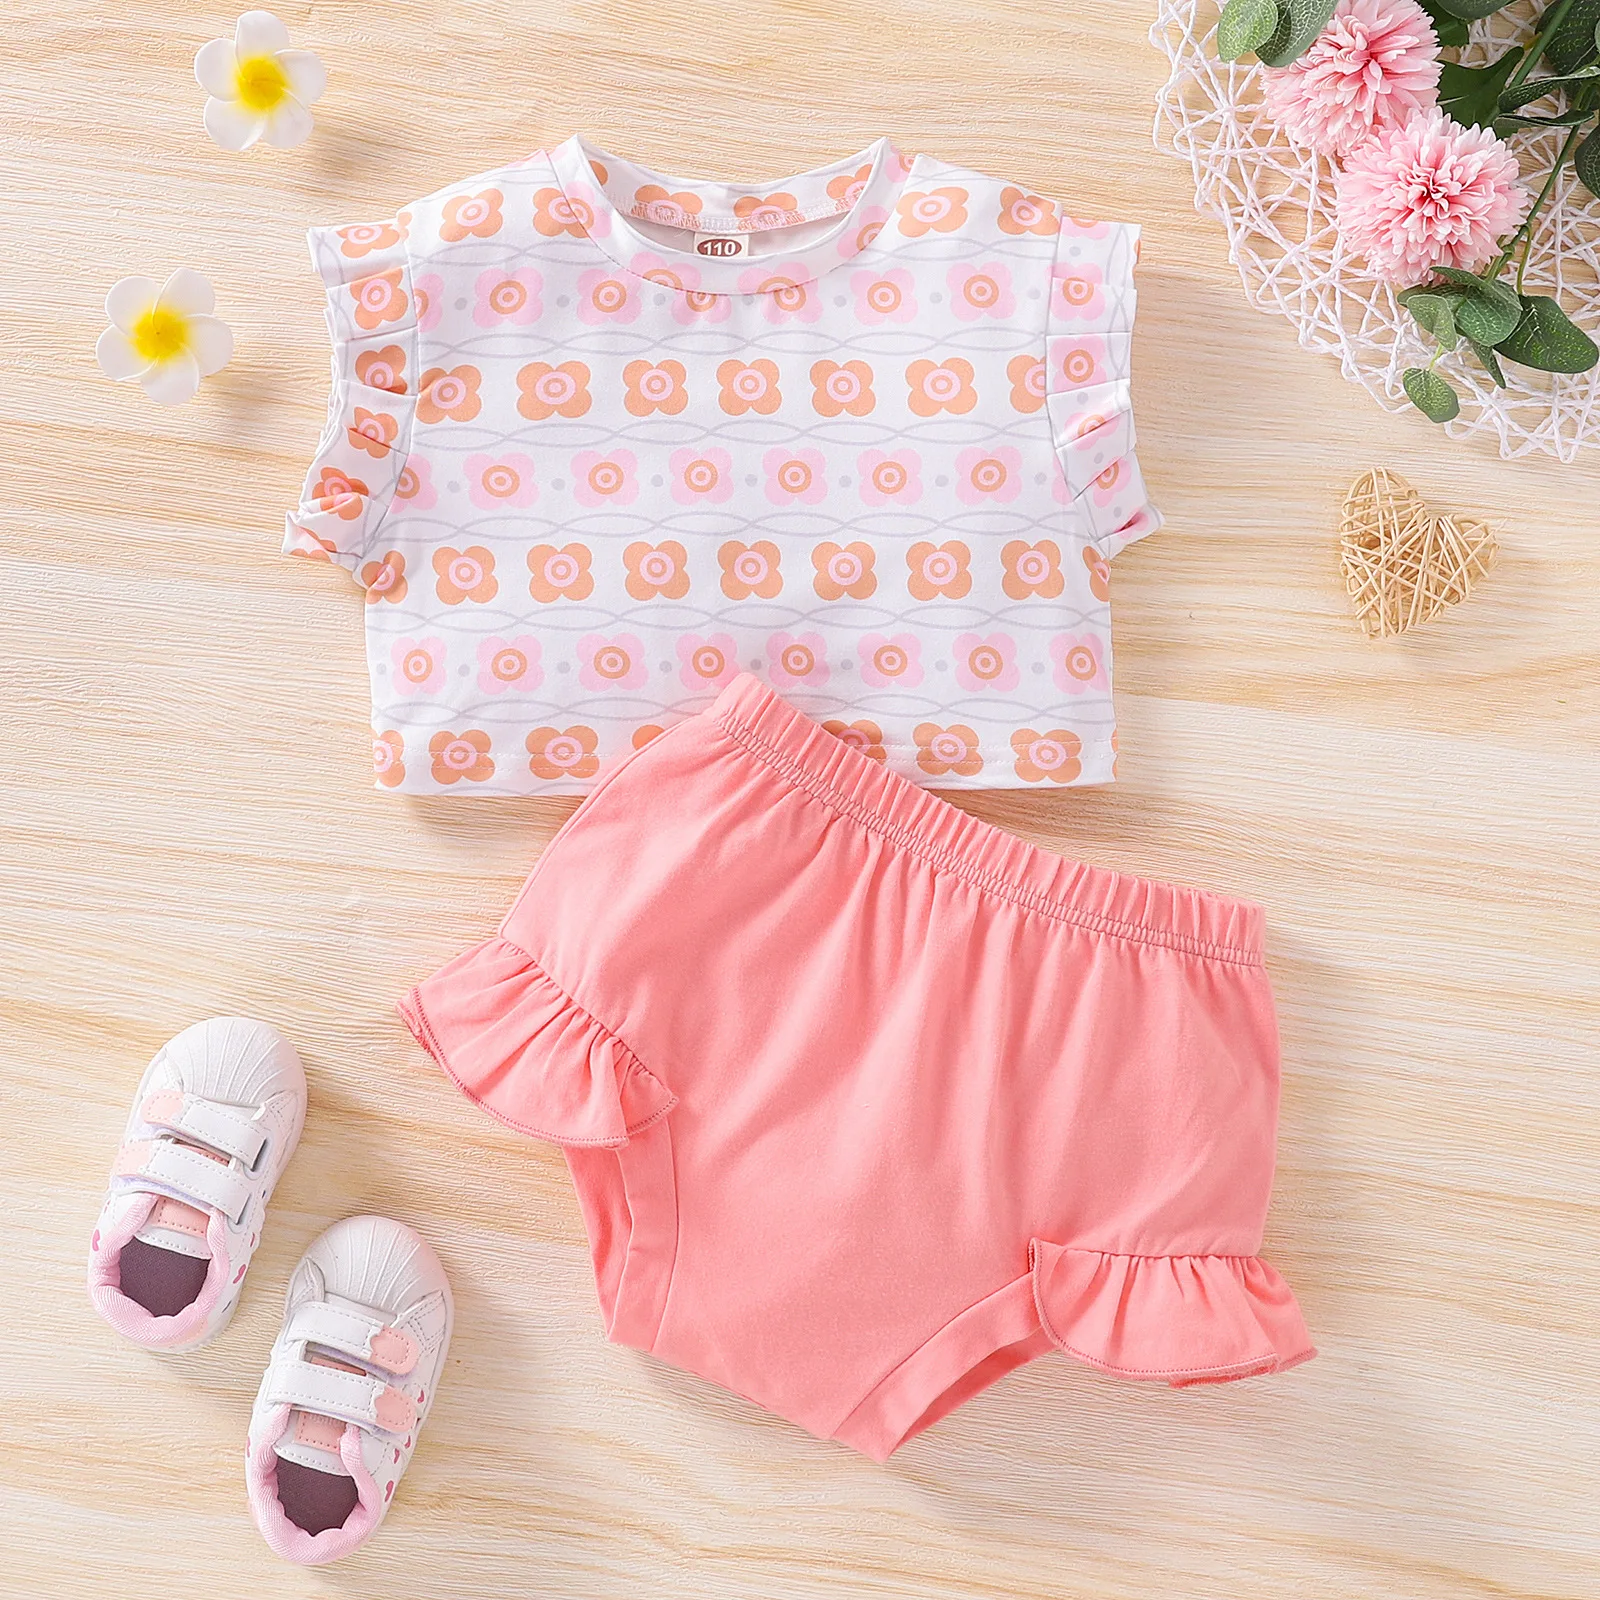 1-5T Fashion Toddler Baby Girls Summer Clothes Sets Newborn Infant Girls Floral Print Sleeveless Insert Top + Shorts 2Piece Set